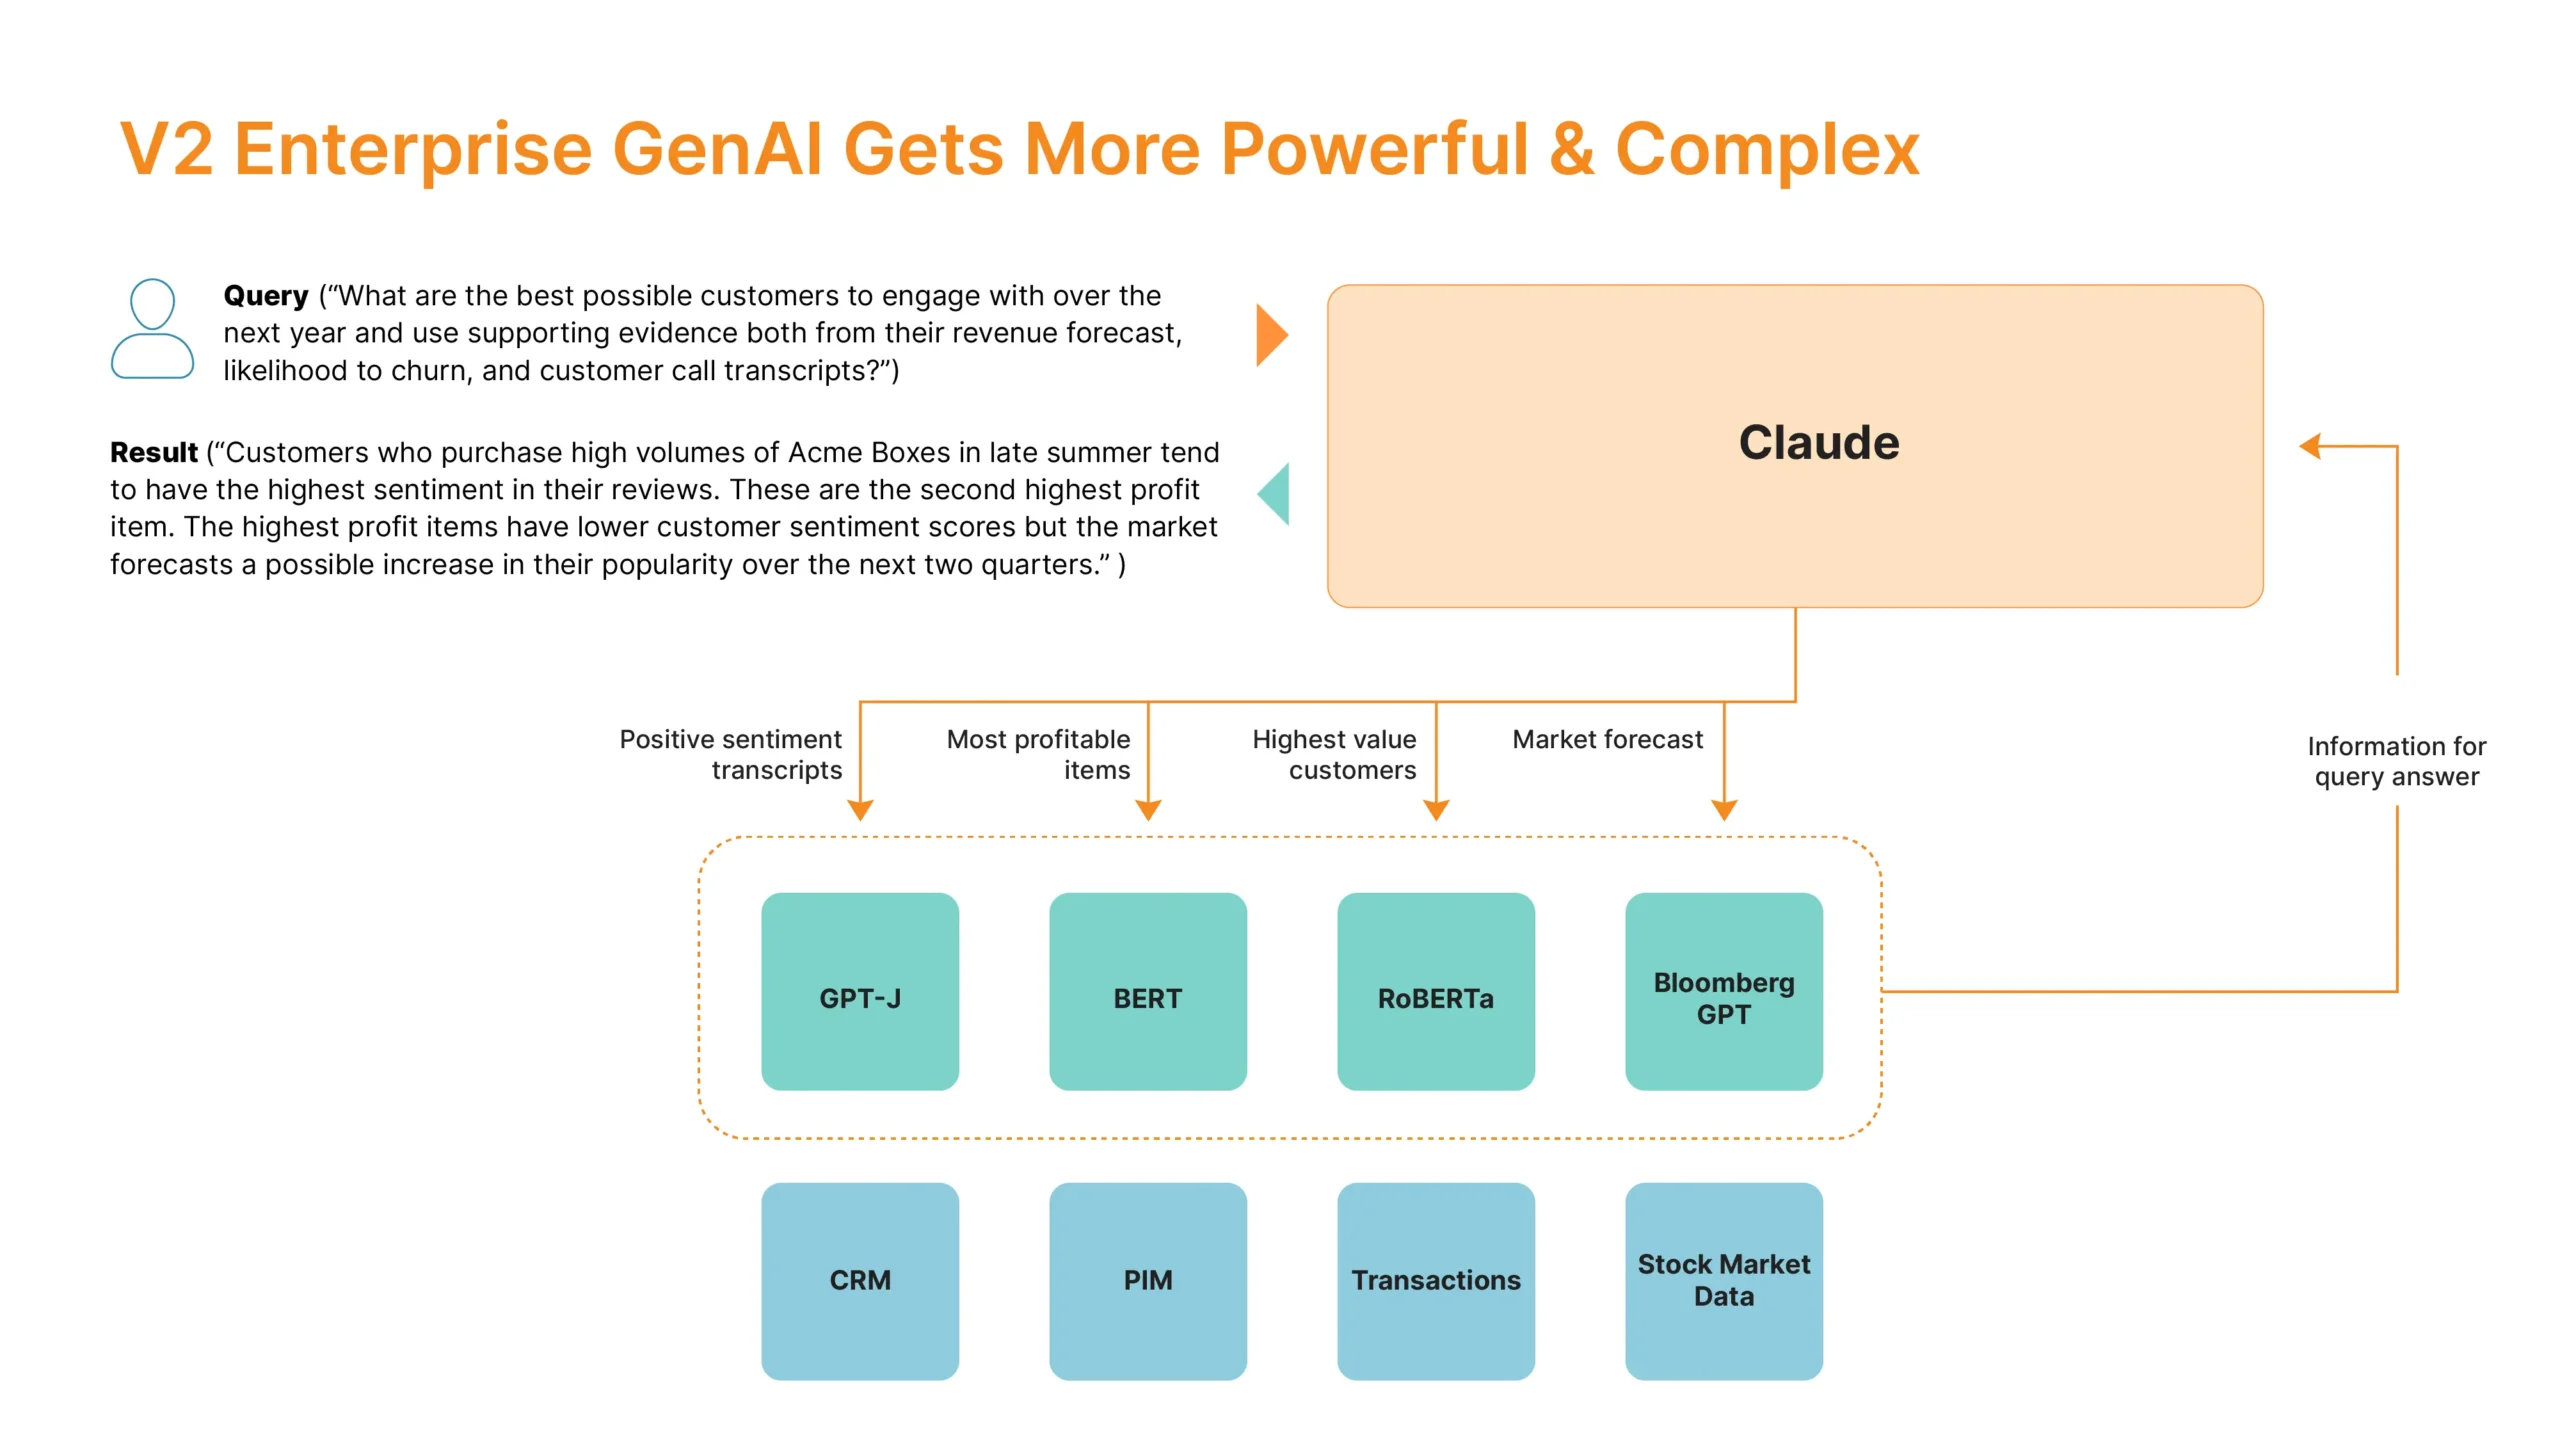 V2 Enterprise GenAl Gets More Powerful & Complex